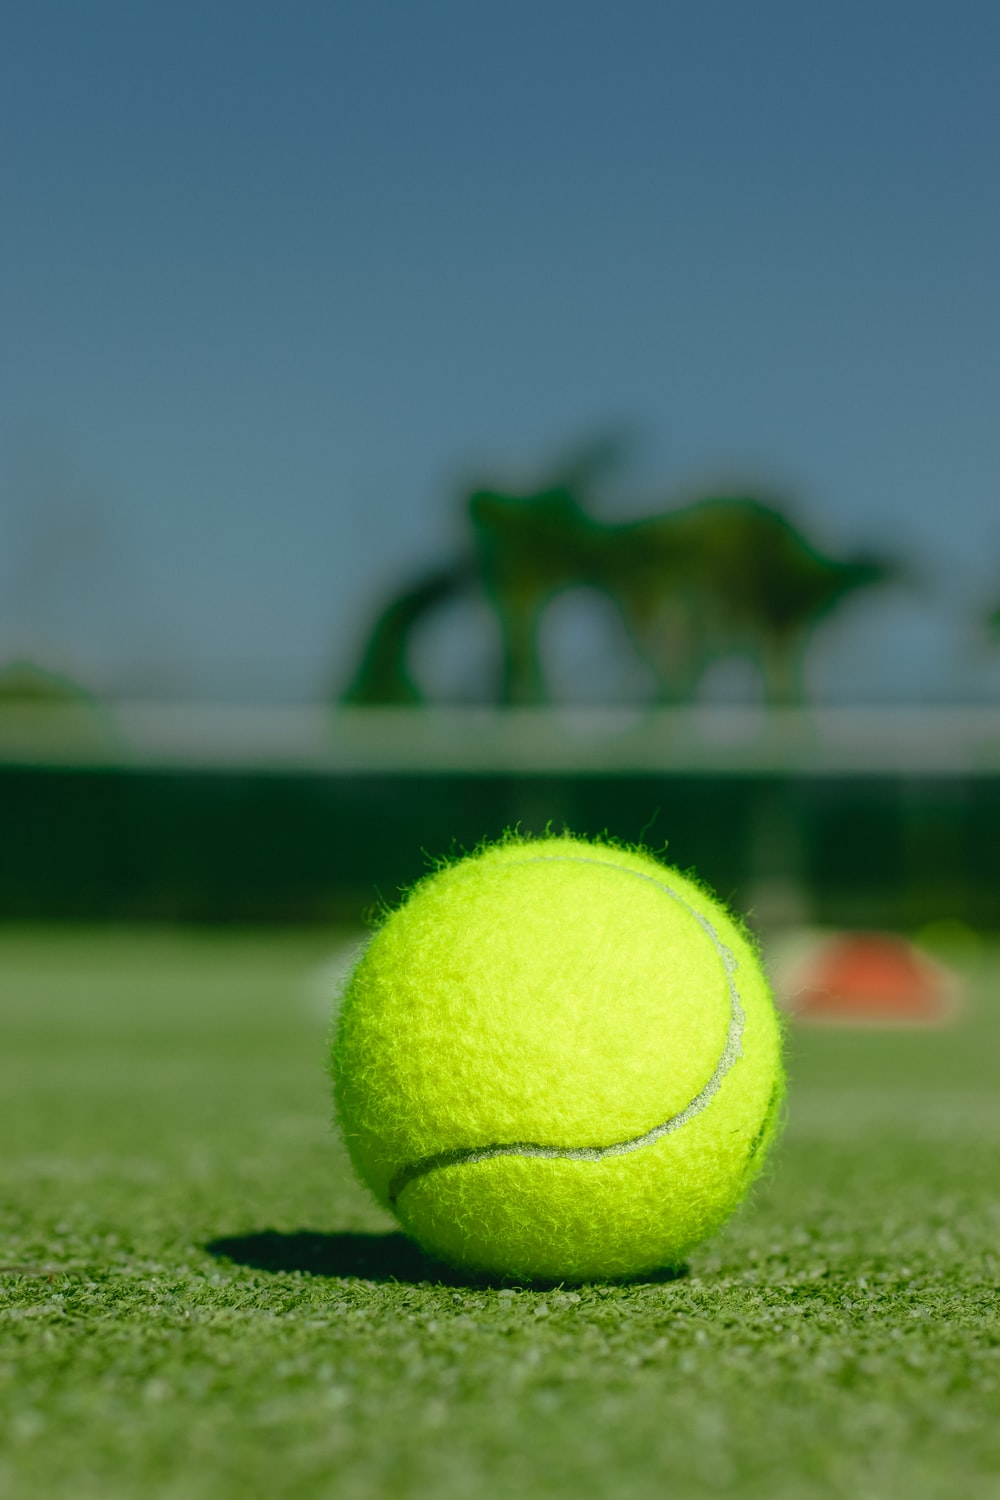 green tennis ball on green grass field during daytime photo